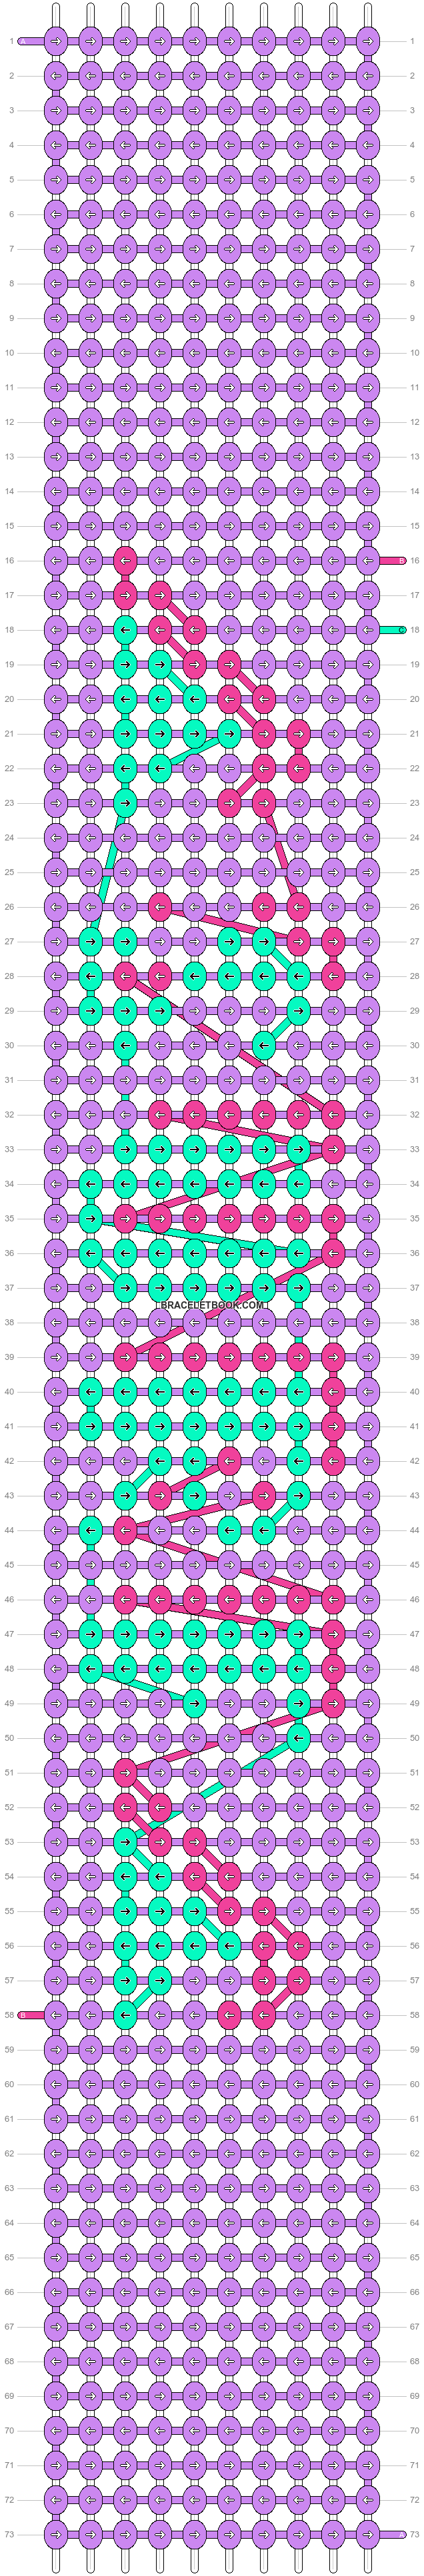 Alpha pattern #91664 variation #166223 pattern